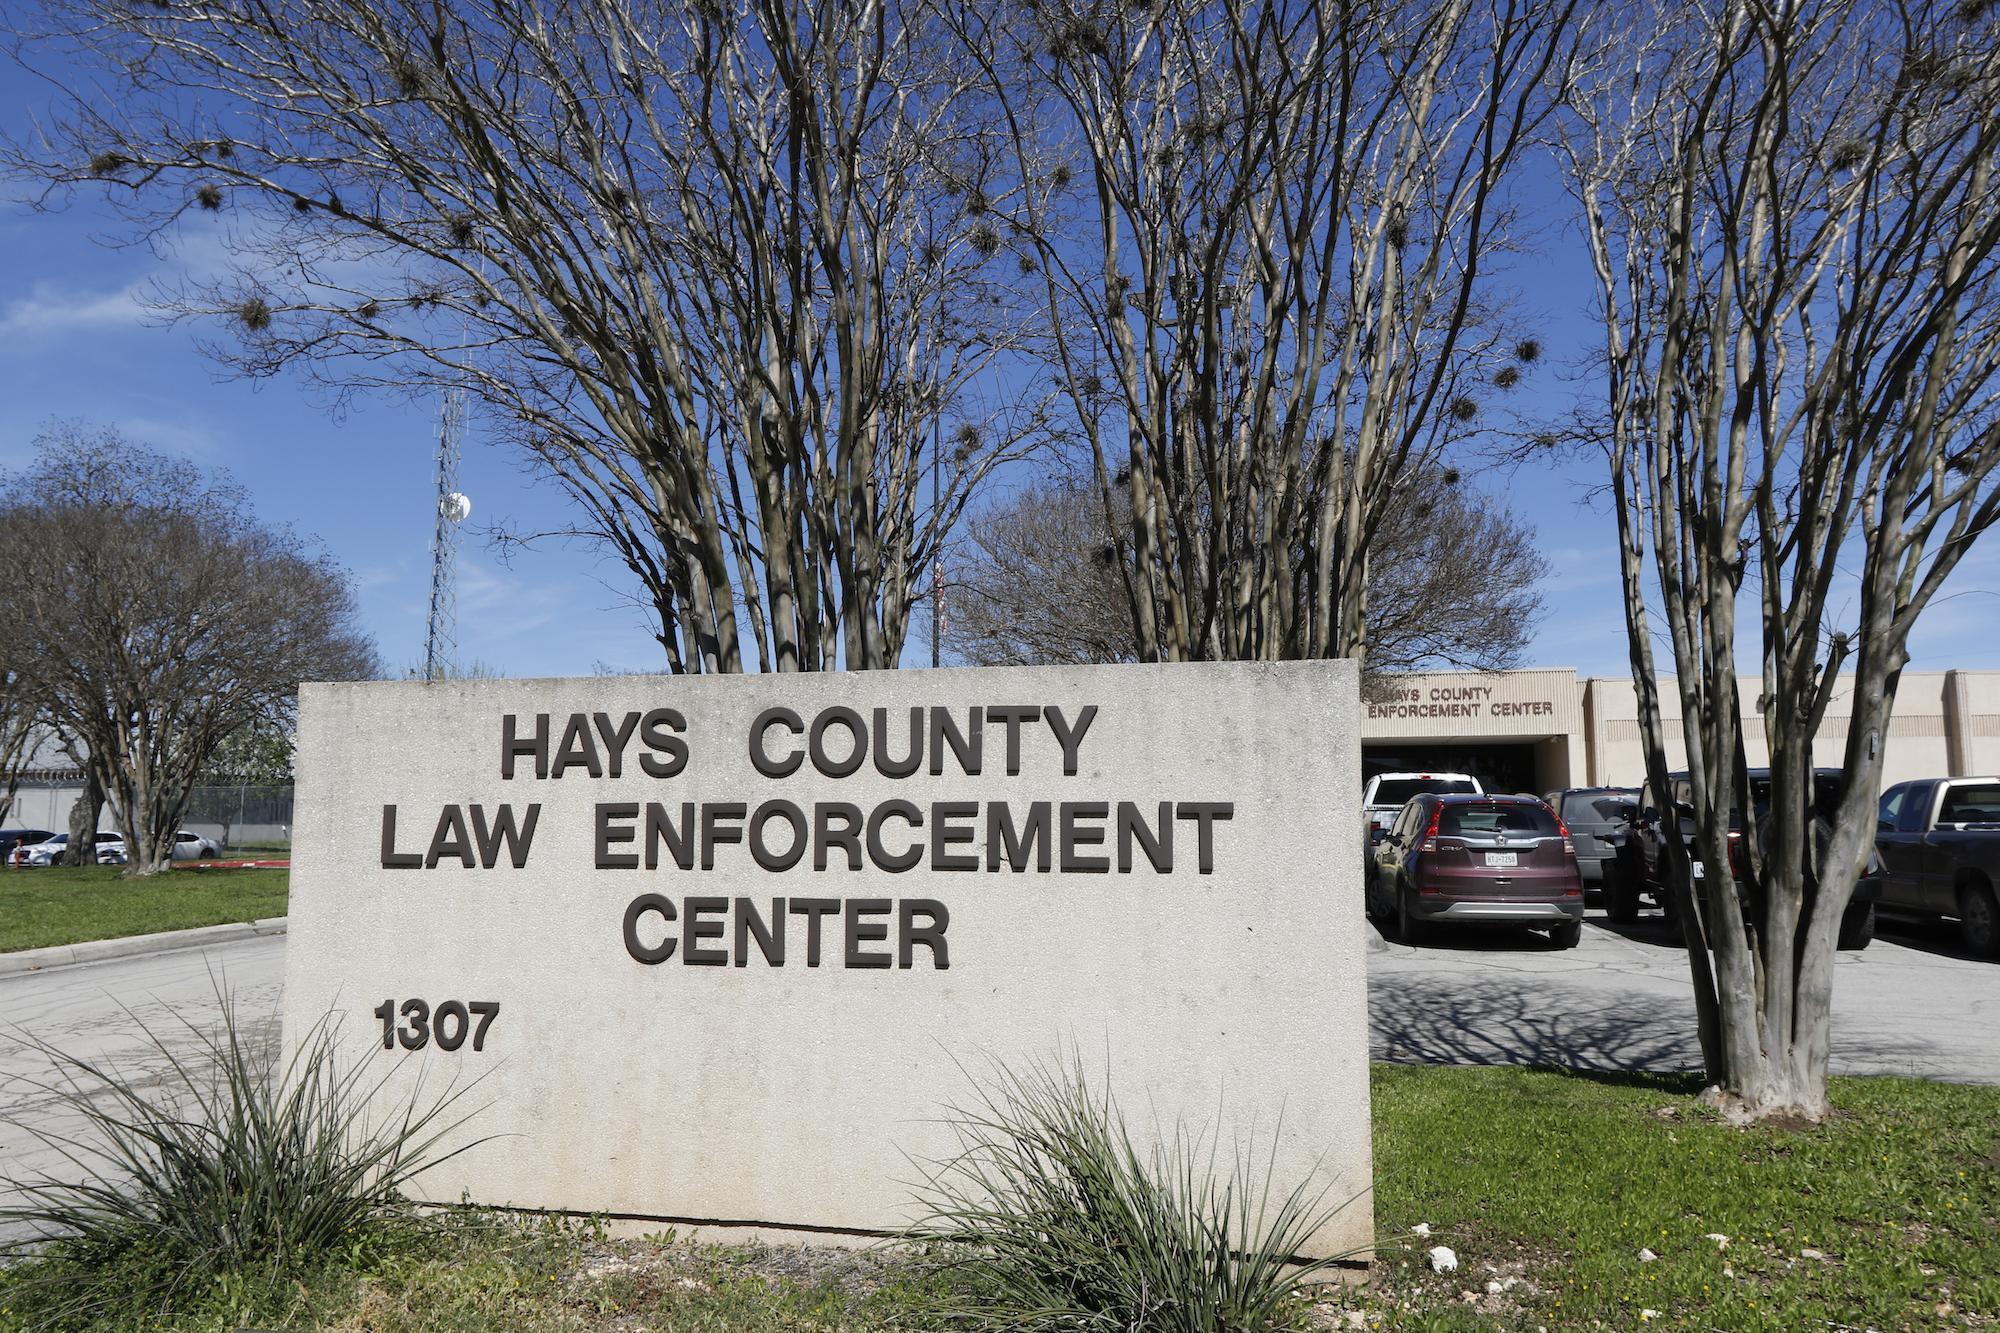 Hays County Law Enforcement Center 28 0 1 ?itok=nGupTzxS